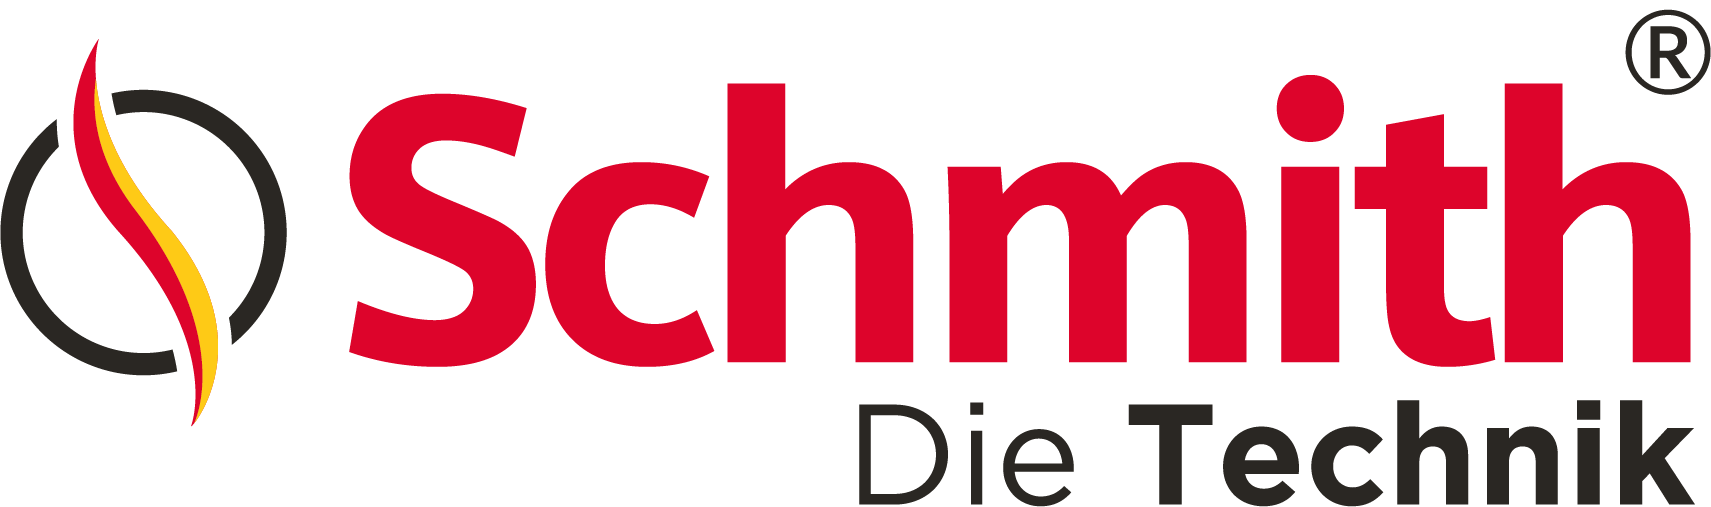 logo_Schmith_die_technik_CMYK.png